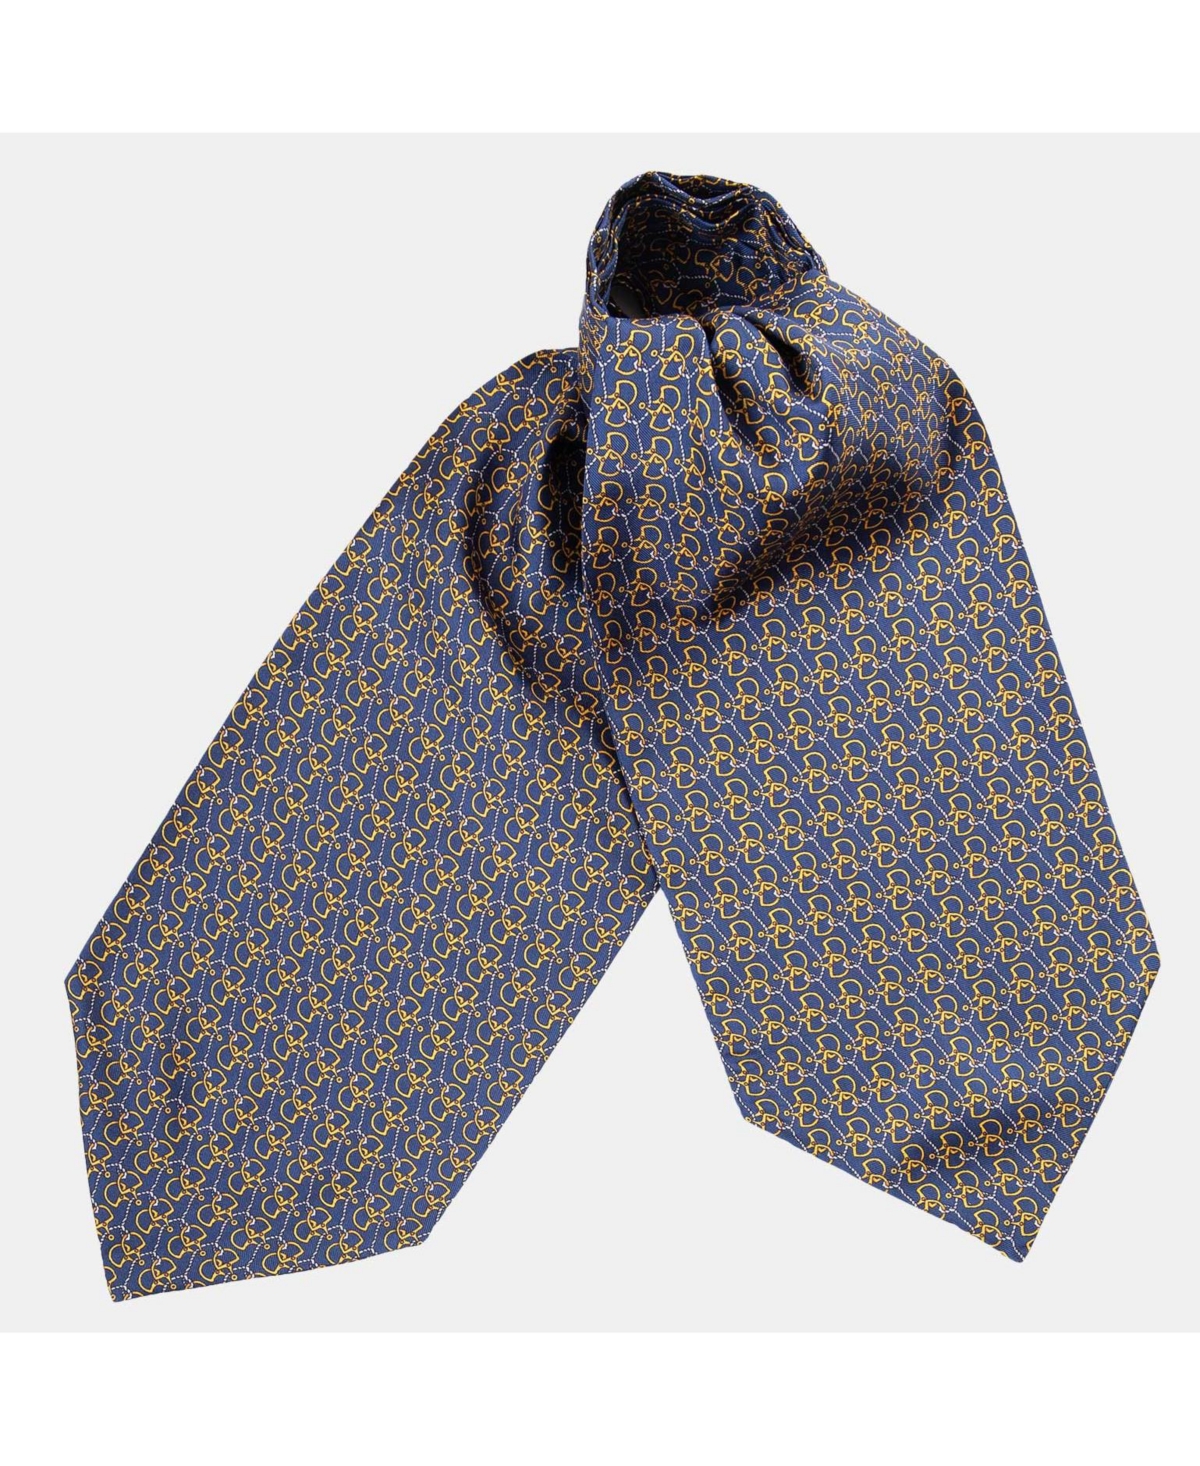 Derby - Silk Ascot Cravat Tie for Men - Navy